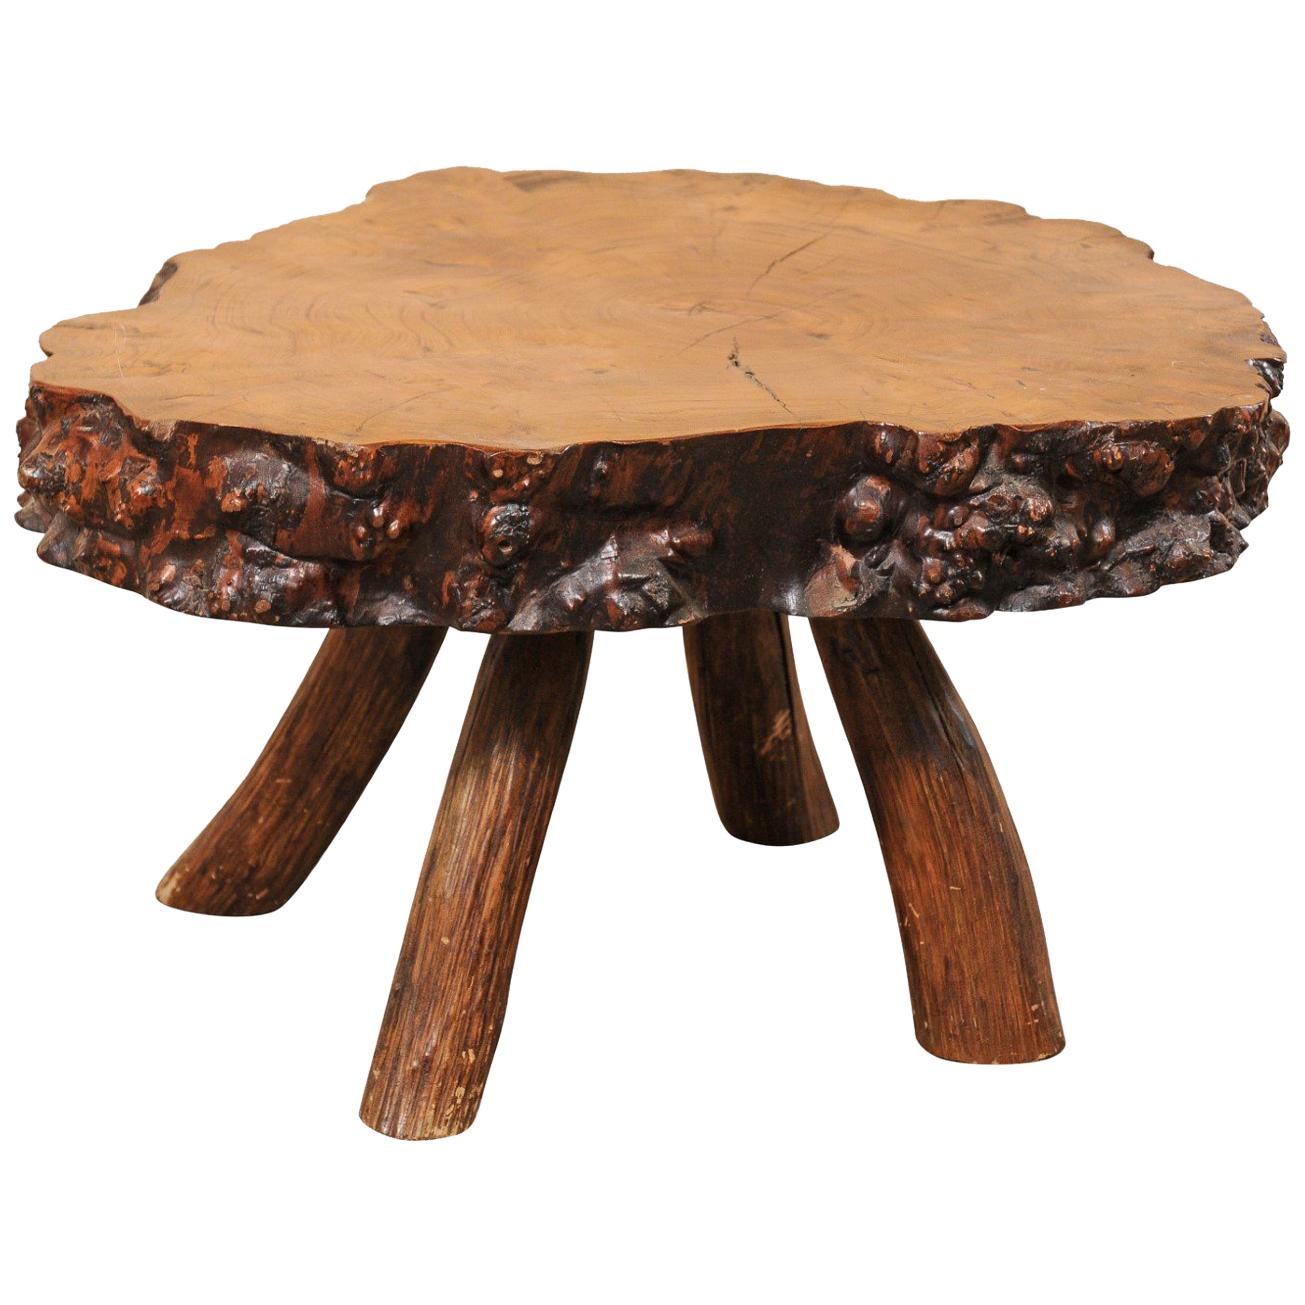 Spanish Burl Wood Slab Rustic Coffee Table